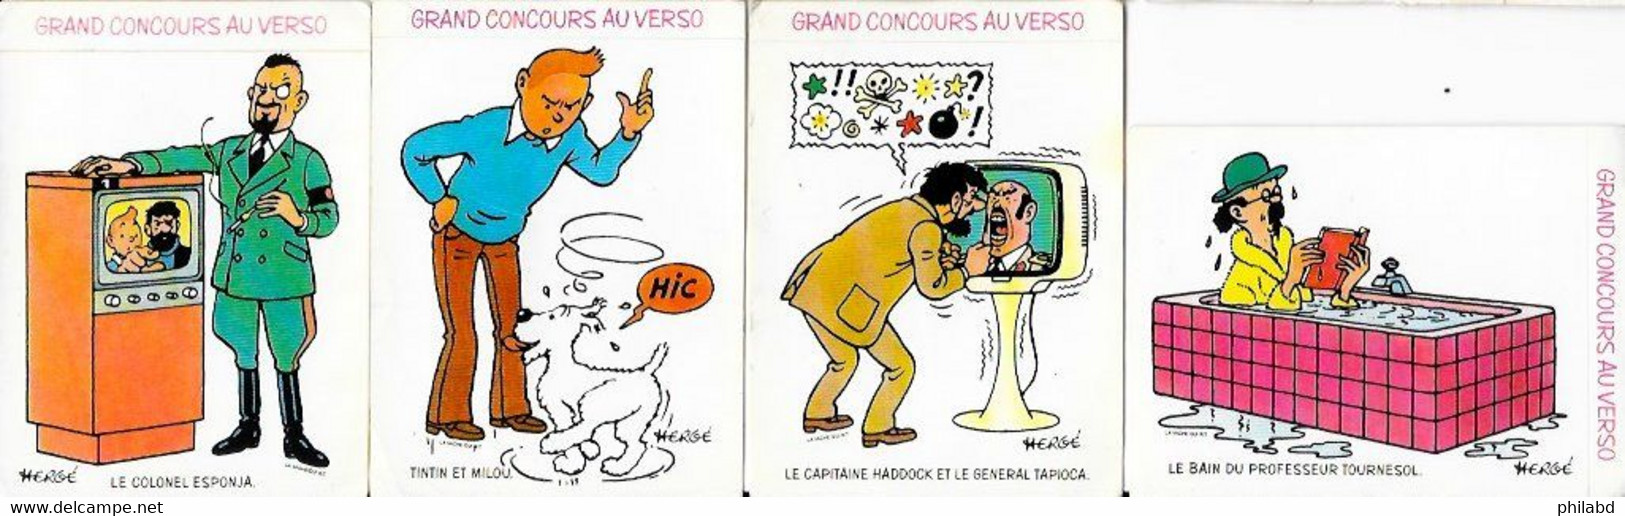 TINTIN La Vache Qui Rit - 4 Adhésifs Autocollants Hergé 1976 - Tintin